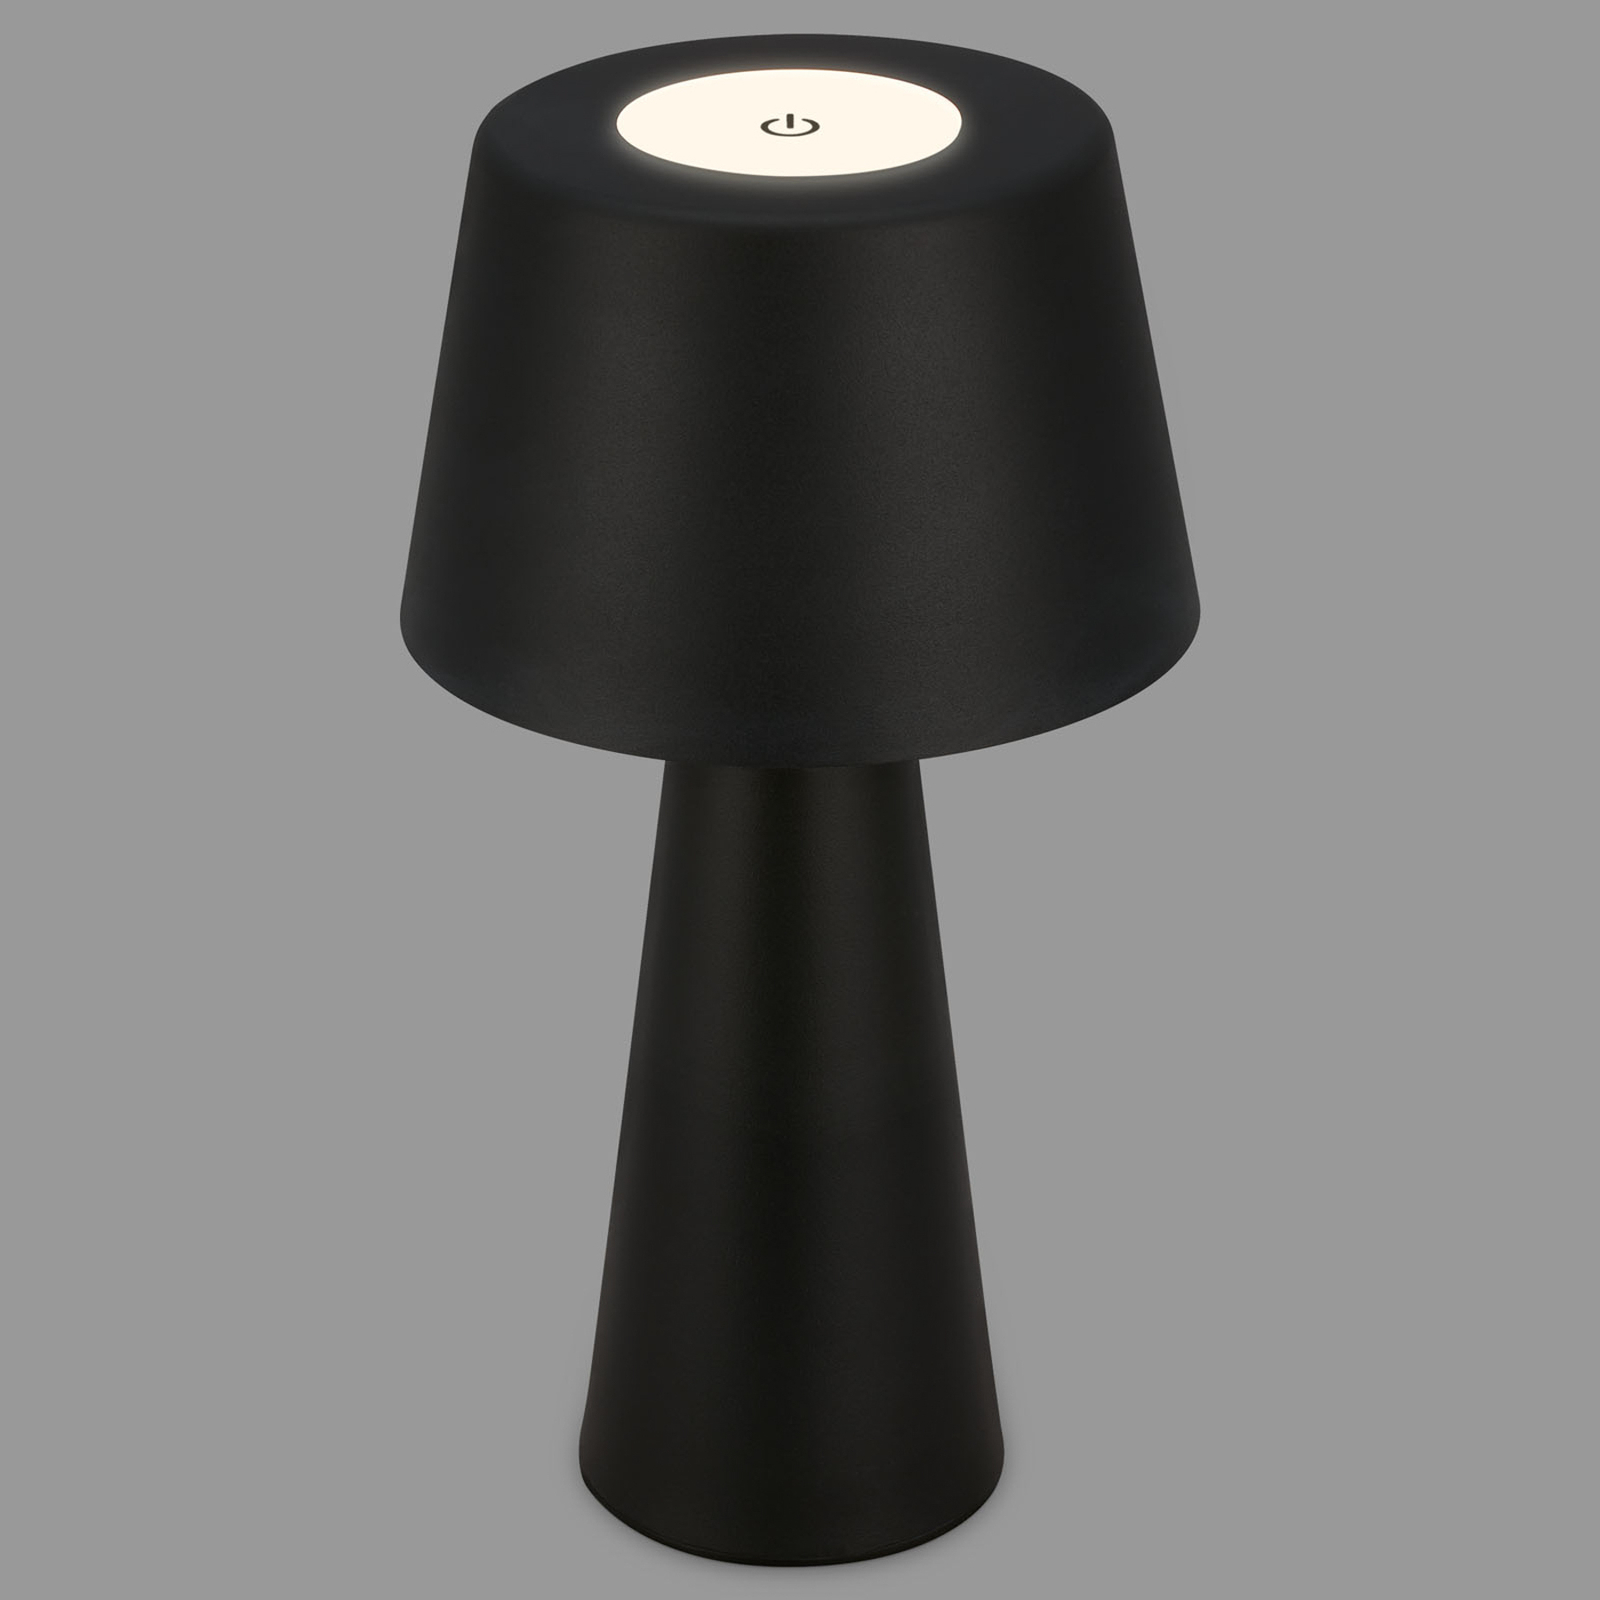 LED tafellamp Kihi met oplaadbare accu, zwart